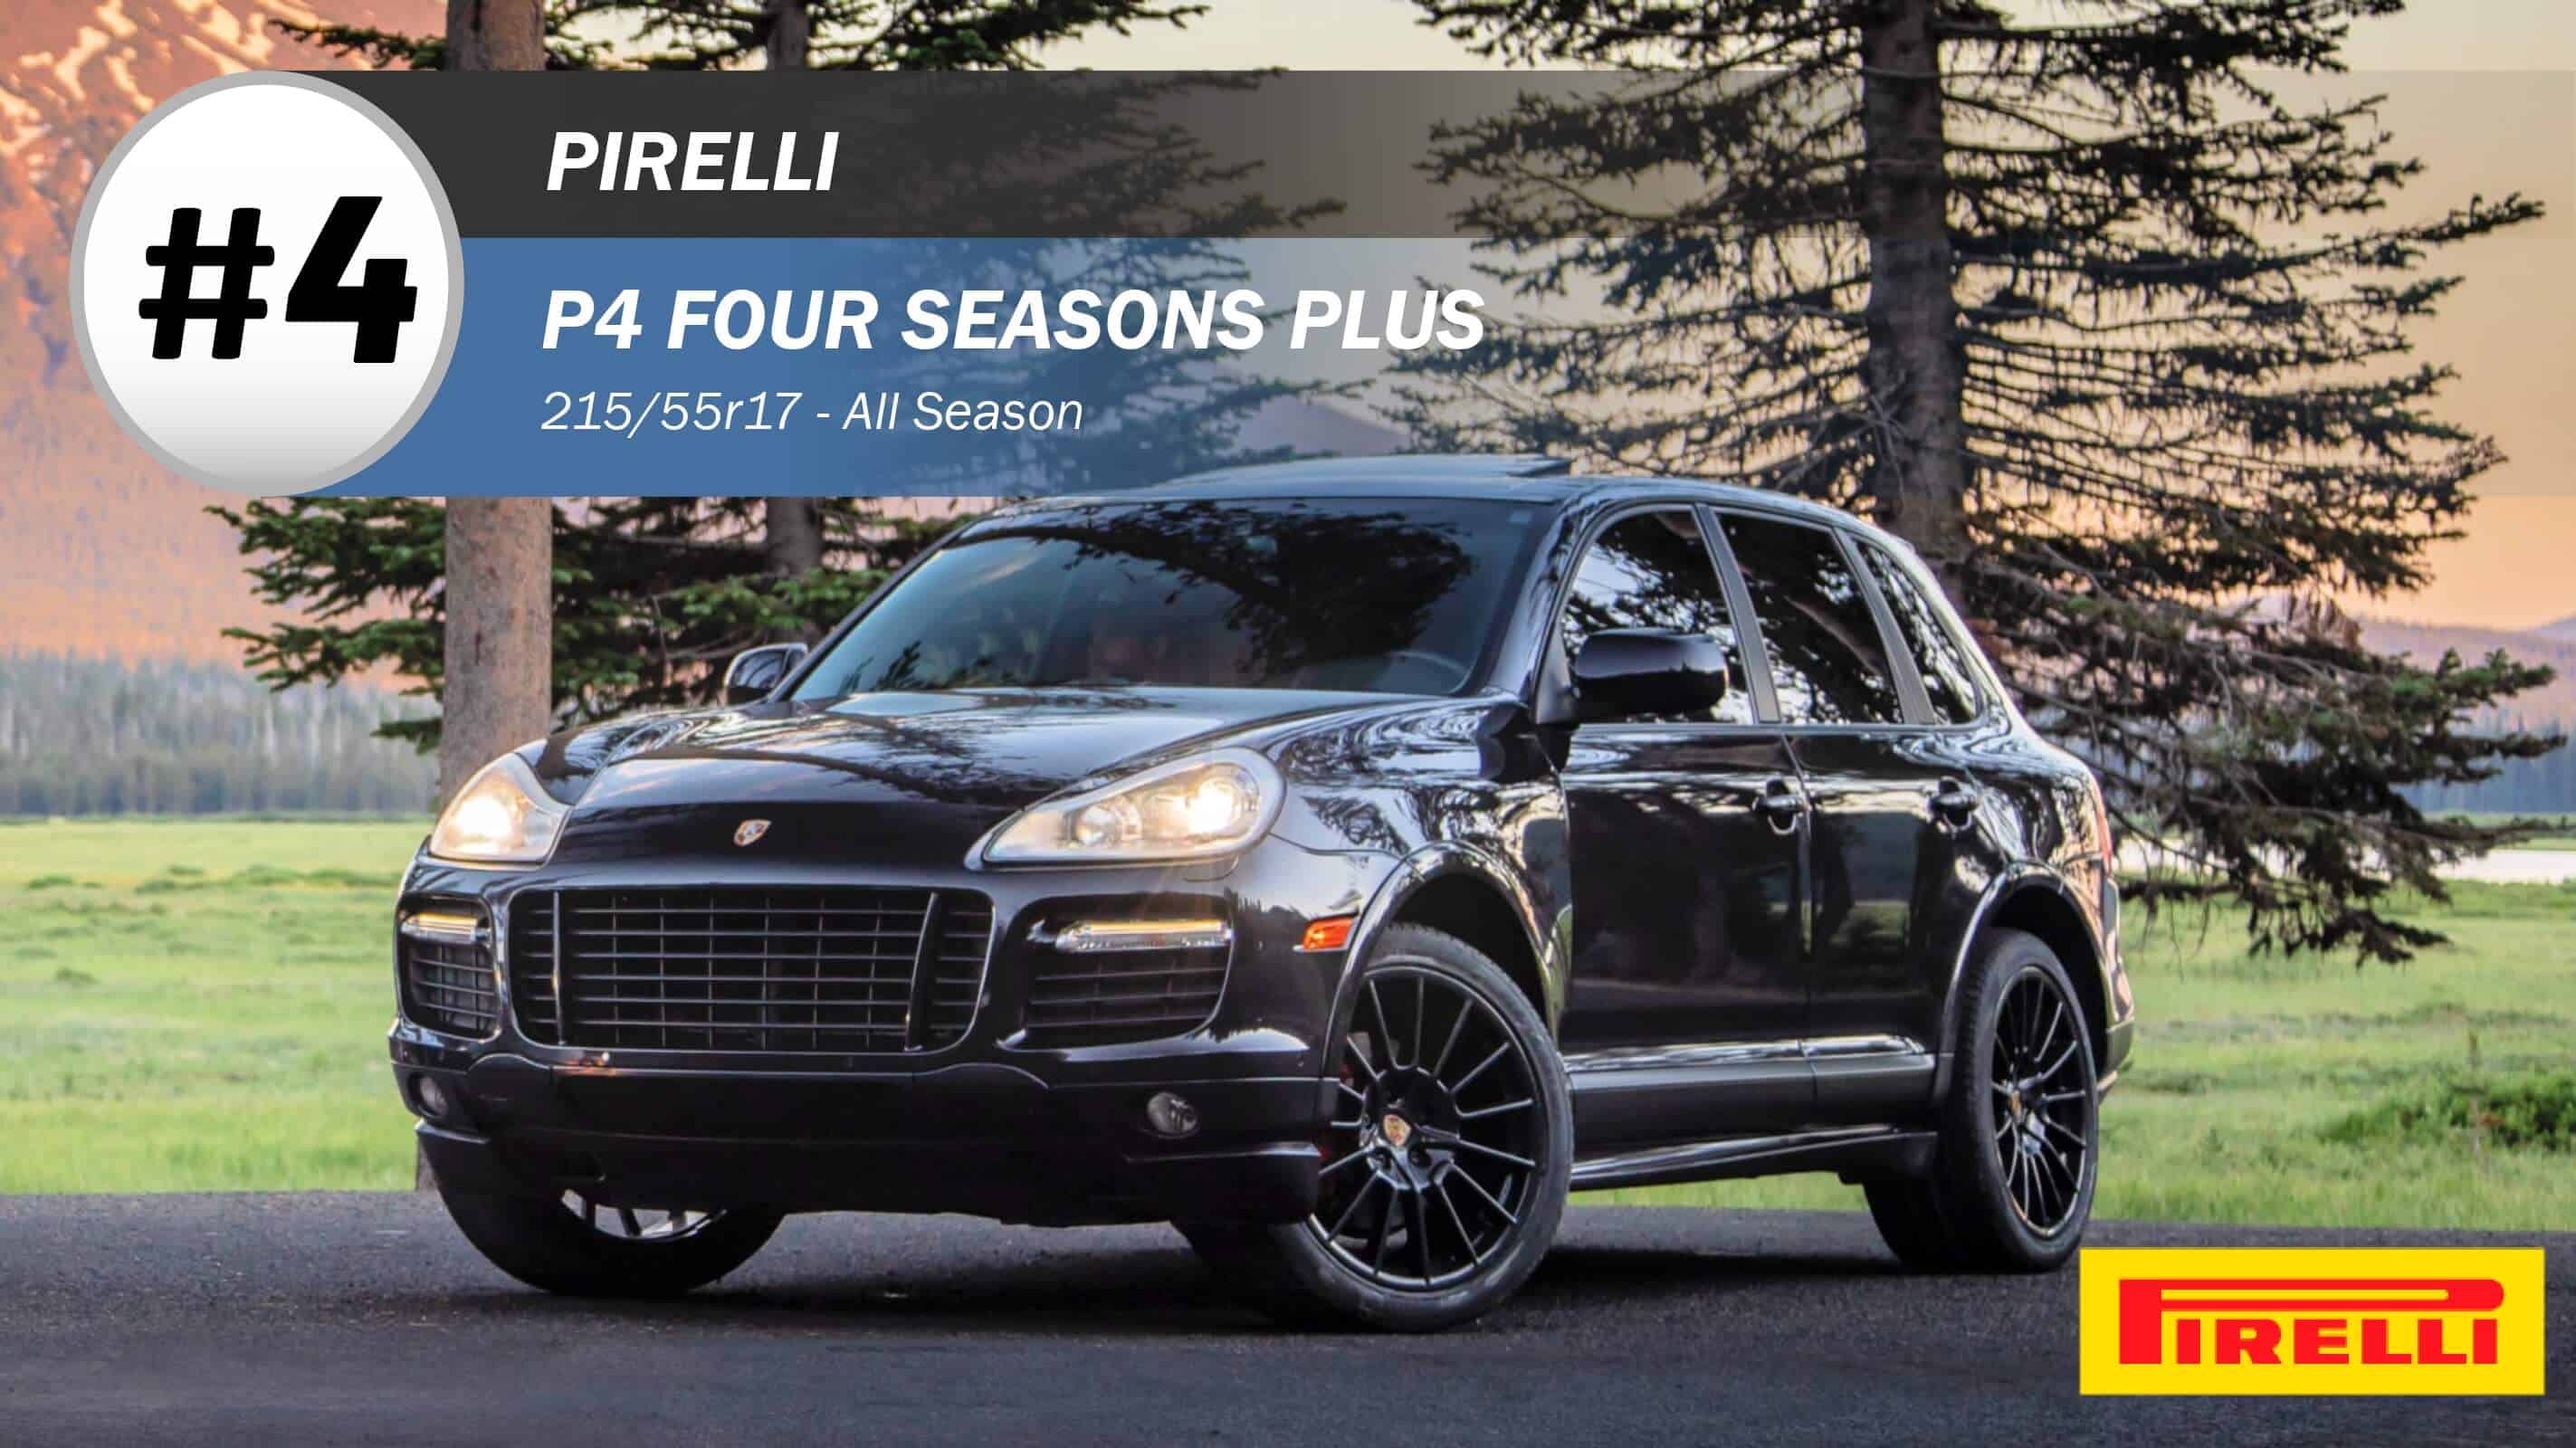 Top #4 All Season Tires: Pirelli P4 Four Seasons Plus – 215/55r17